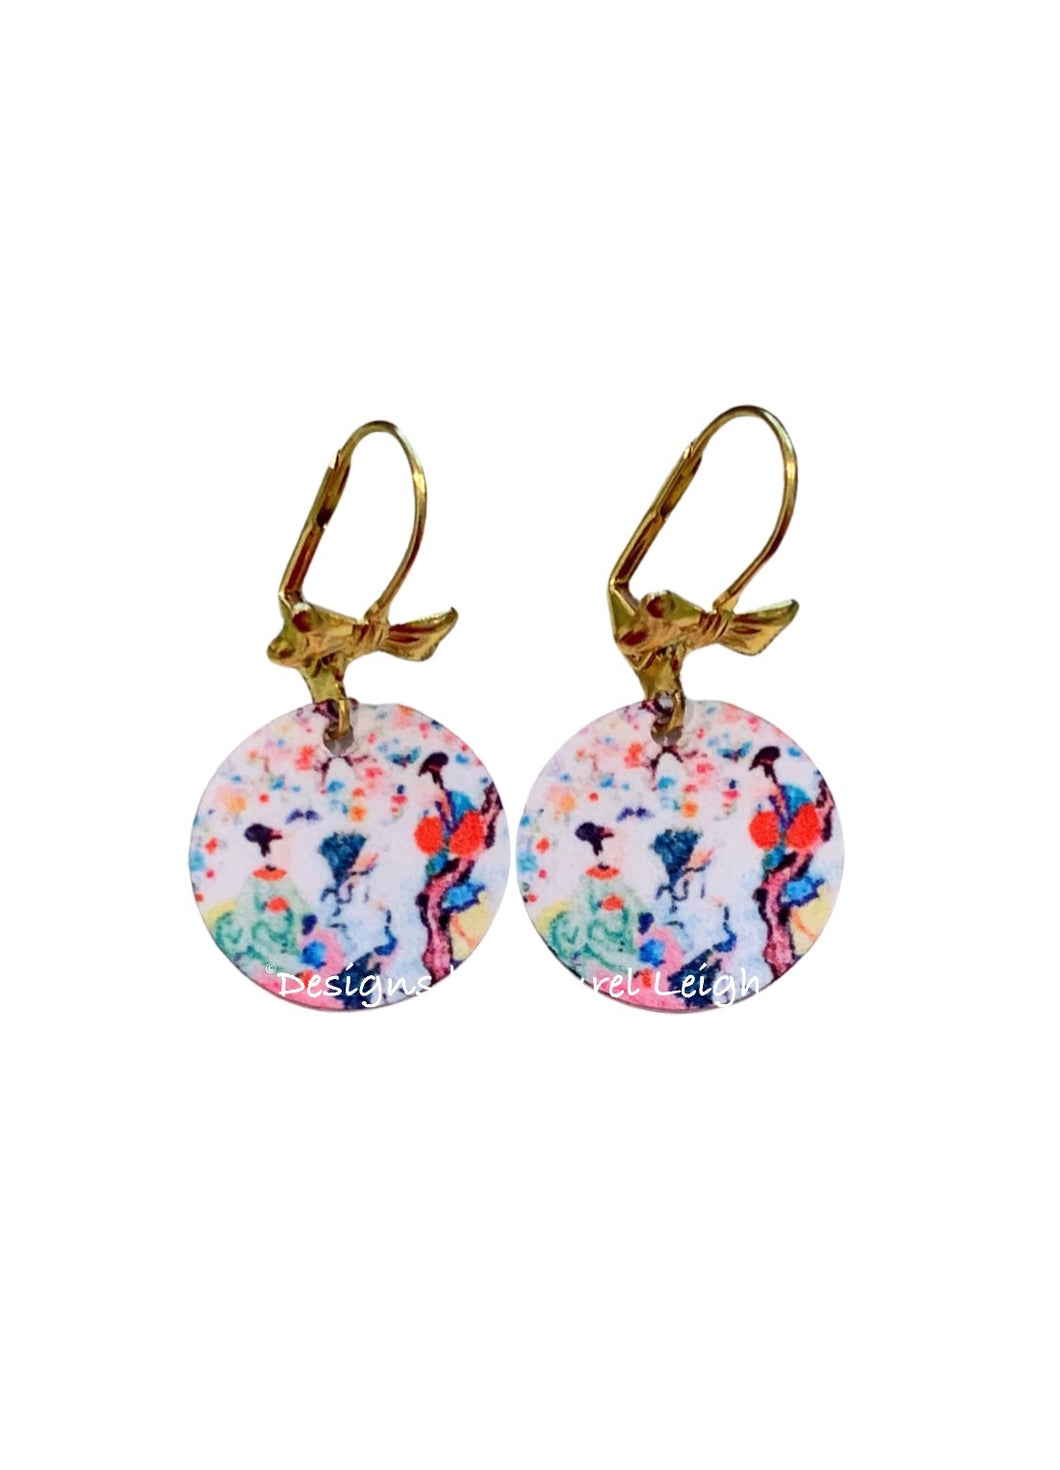 Chinoiserie Watercolor Geisha & Dainty Bow Earrings - Ginger jar